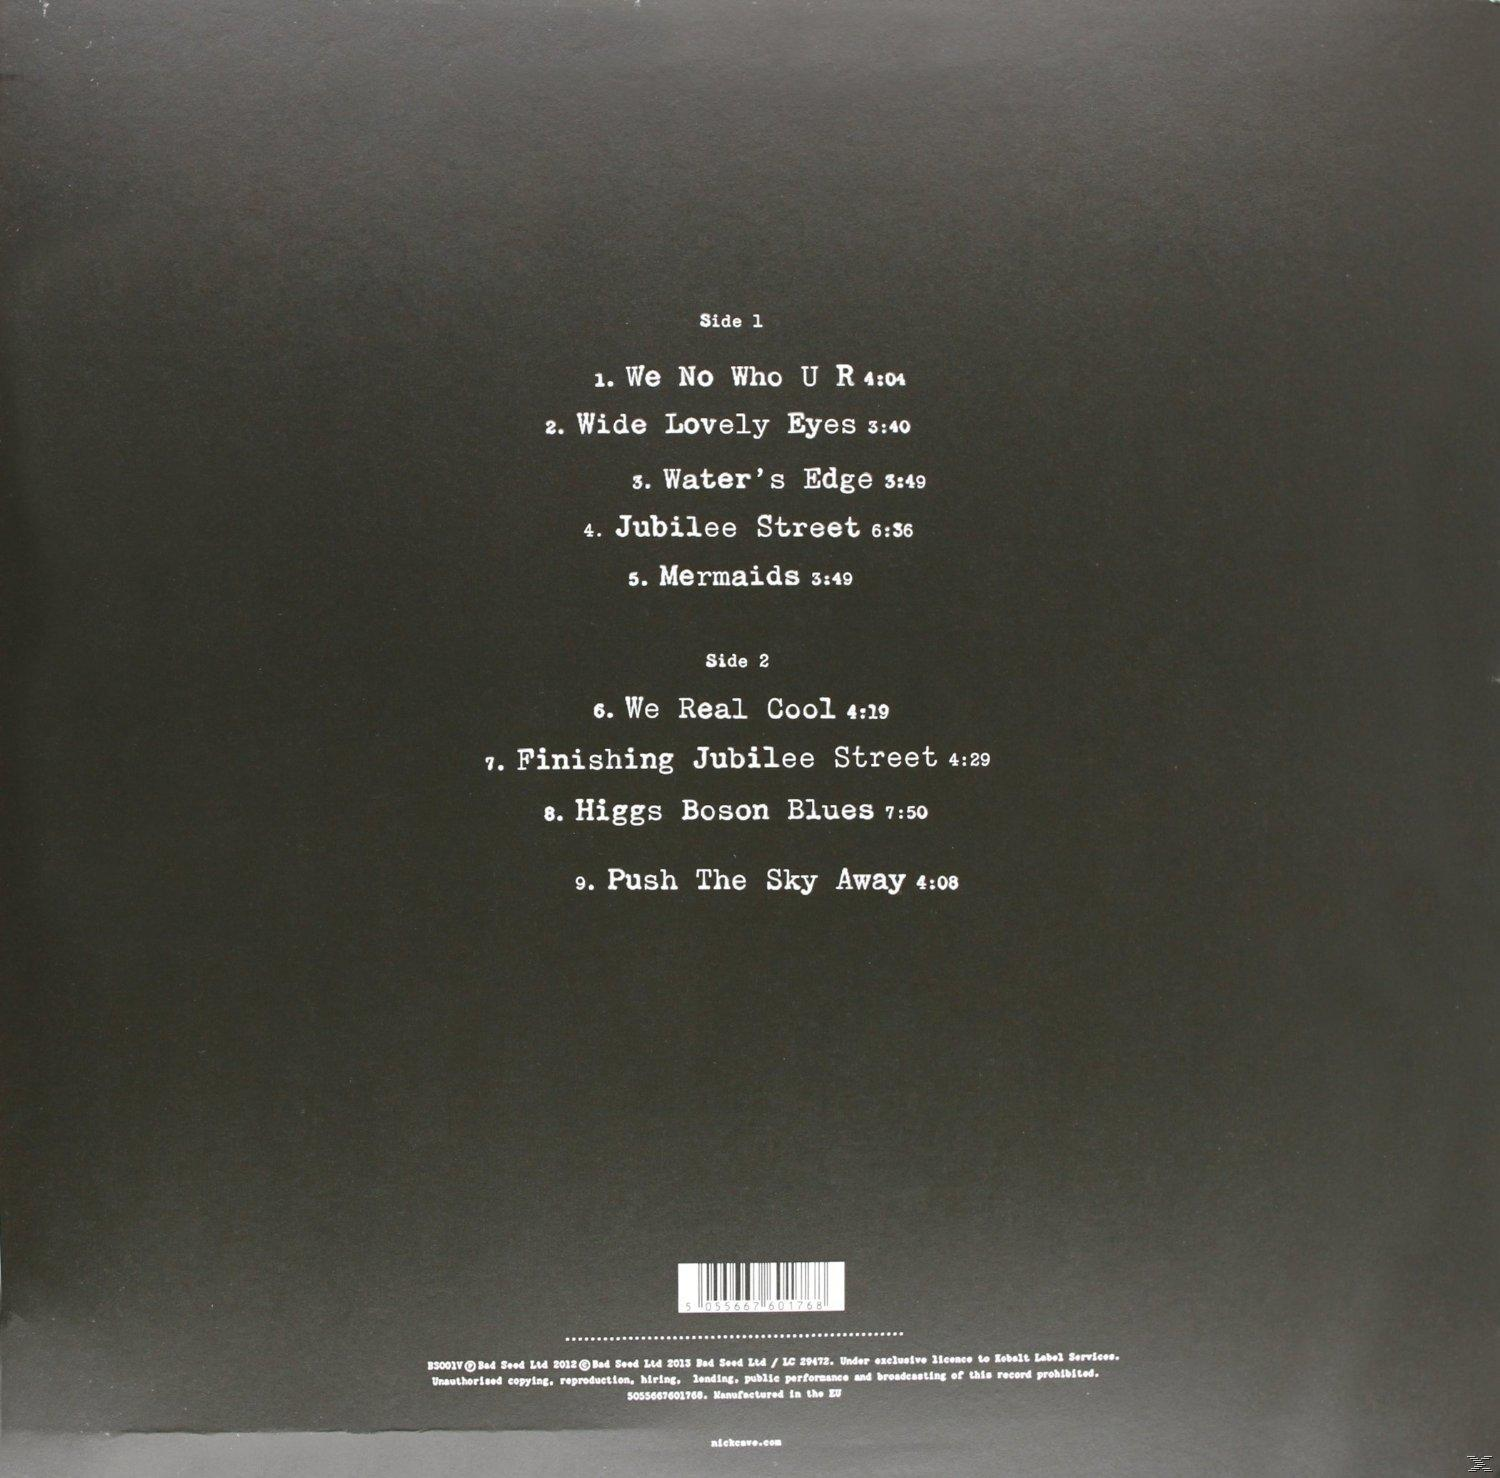 Bad Seeds (Vinyl) AWAY PUSH The (180G+MP3) - THE SKY & Nick - Cave